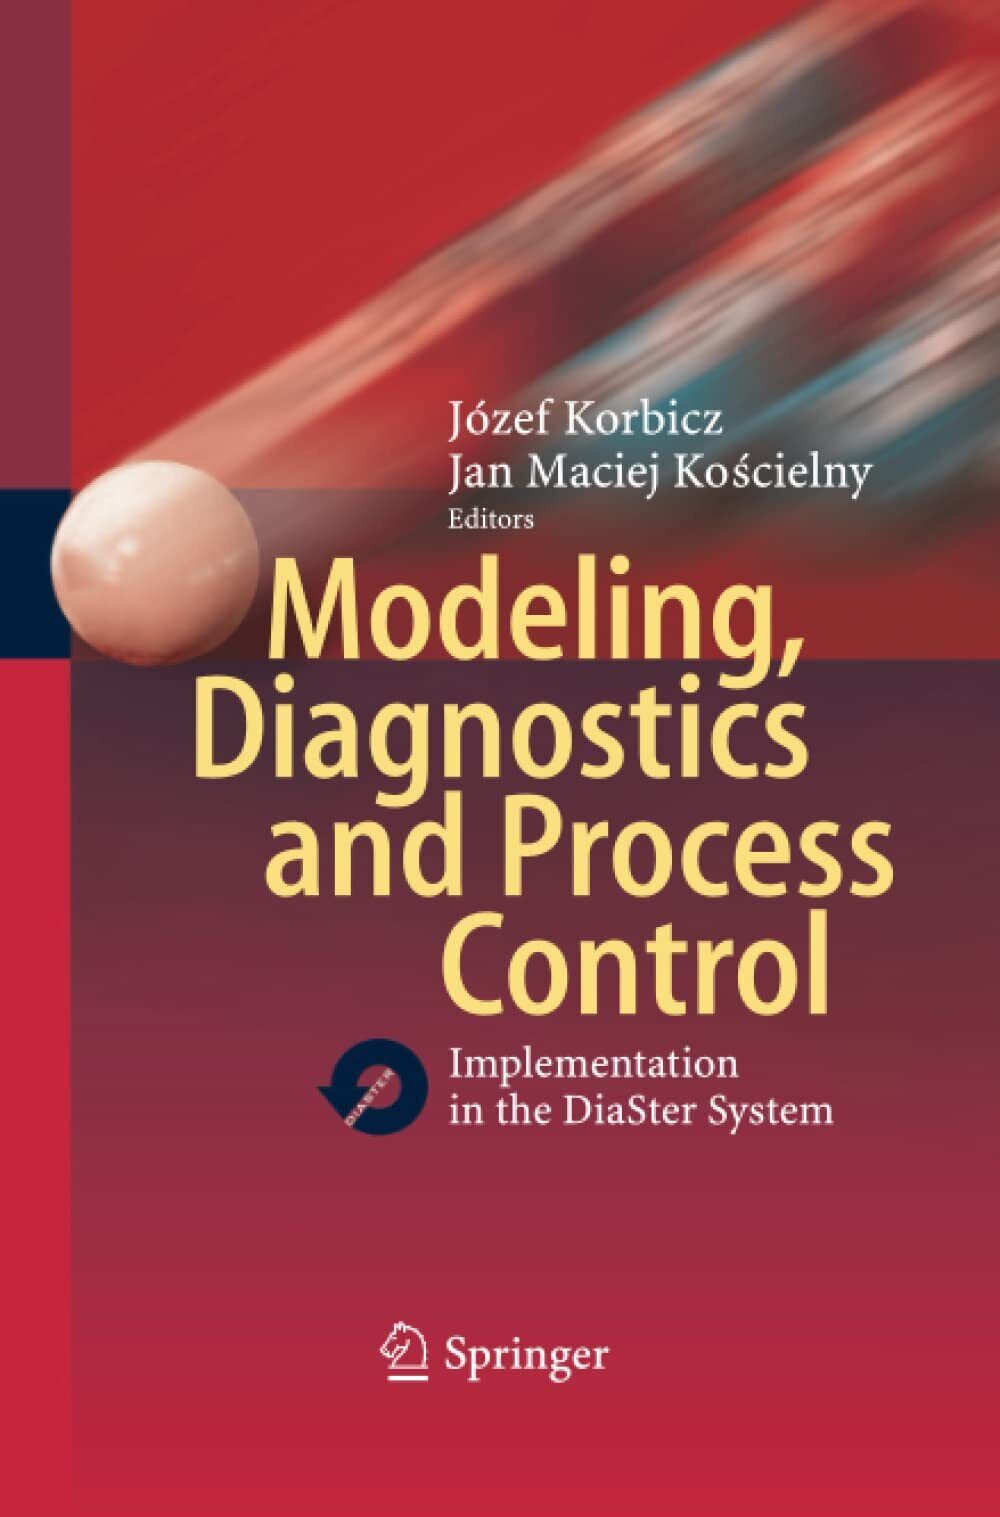 Modeling, Diagnostics and Process Control - J?zef Korbicz - Springer, 2014